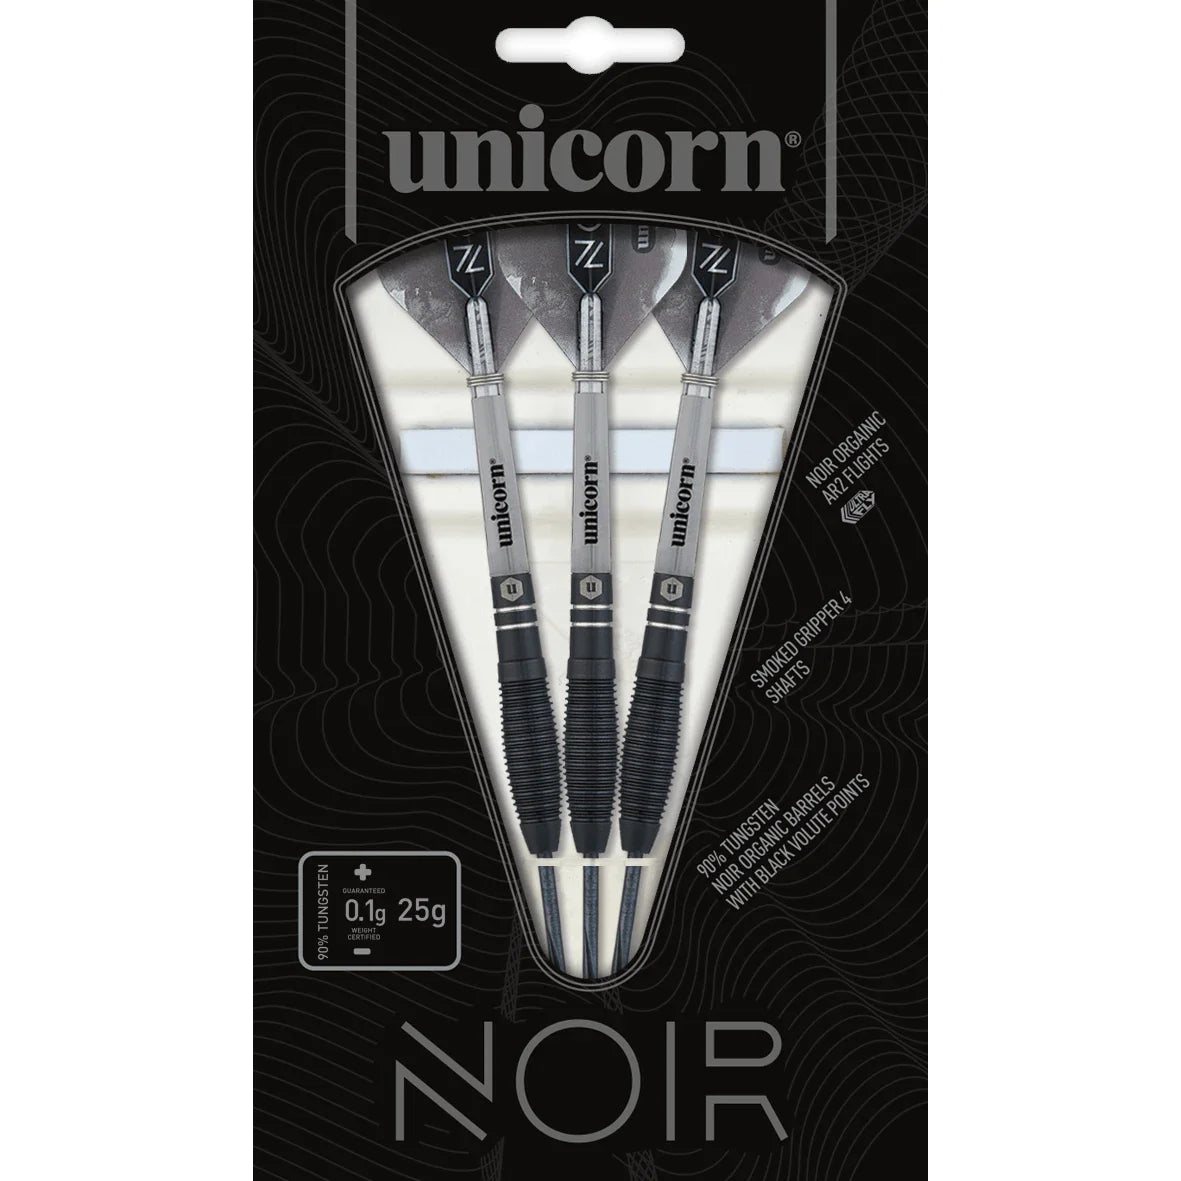 Unicorn Noir Style 1 25g Darts